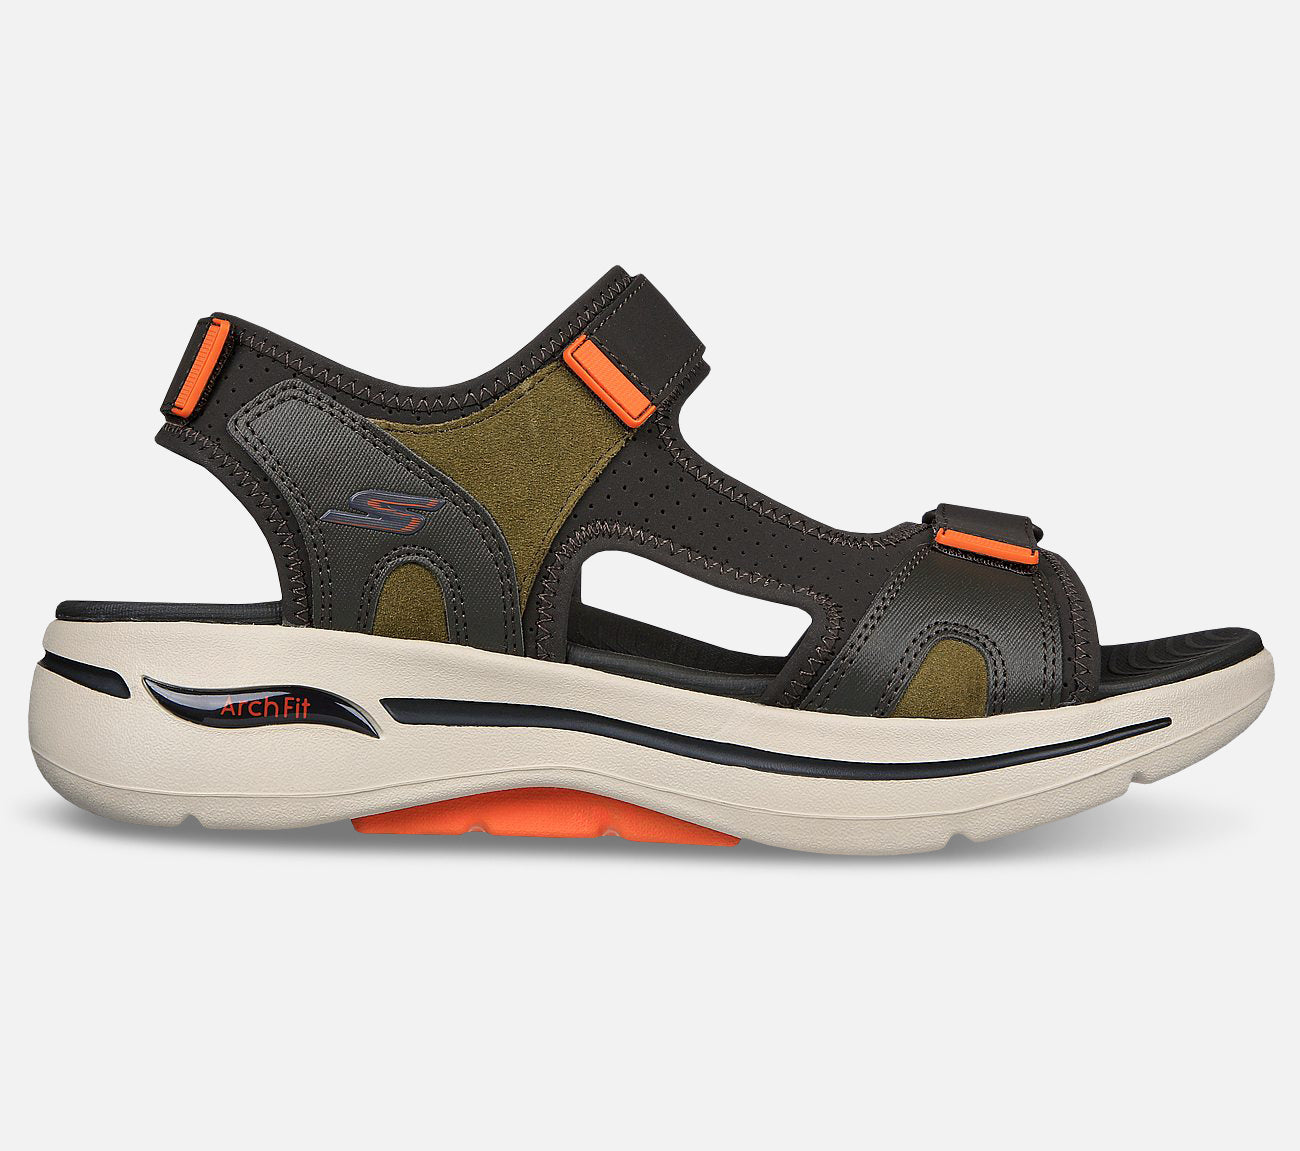 GO WALK Arch Fit - Mission Sandal Sandal Skechers